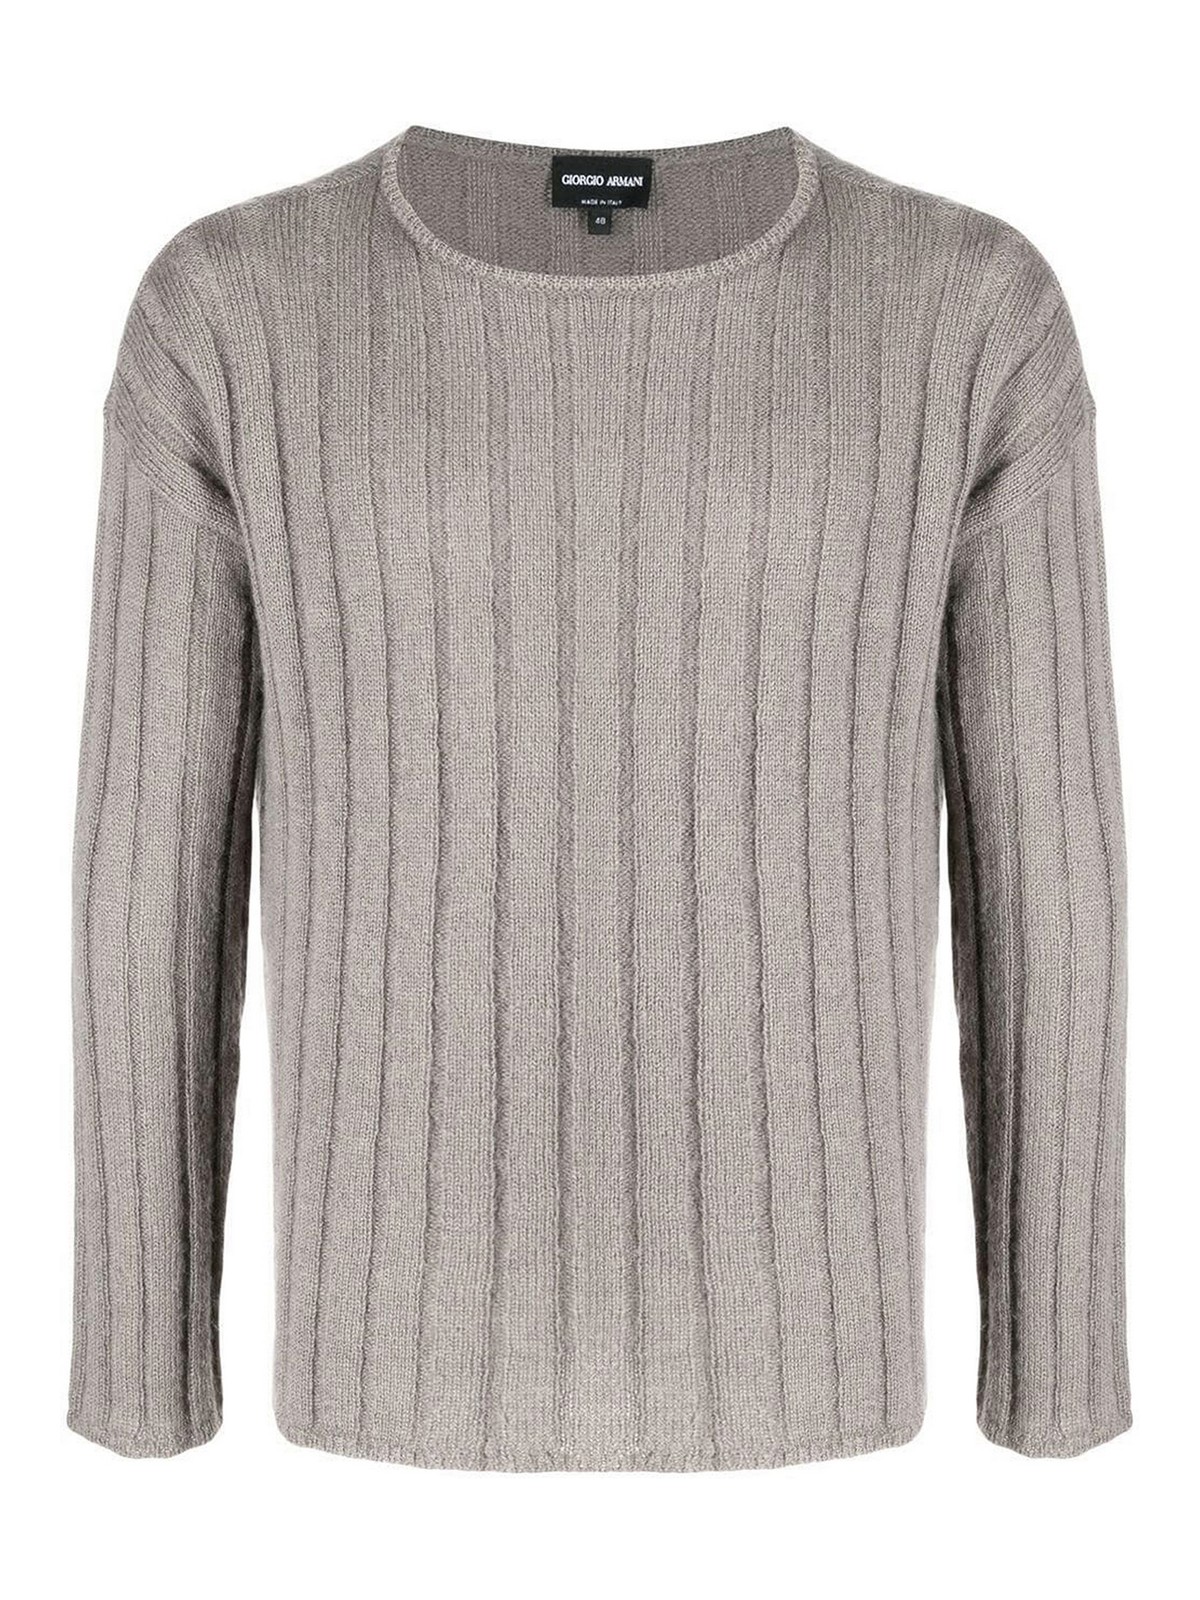 Giorgio Armani Men's Maglia Mohair and Wool Knit Pullover Sweater